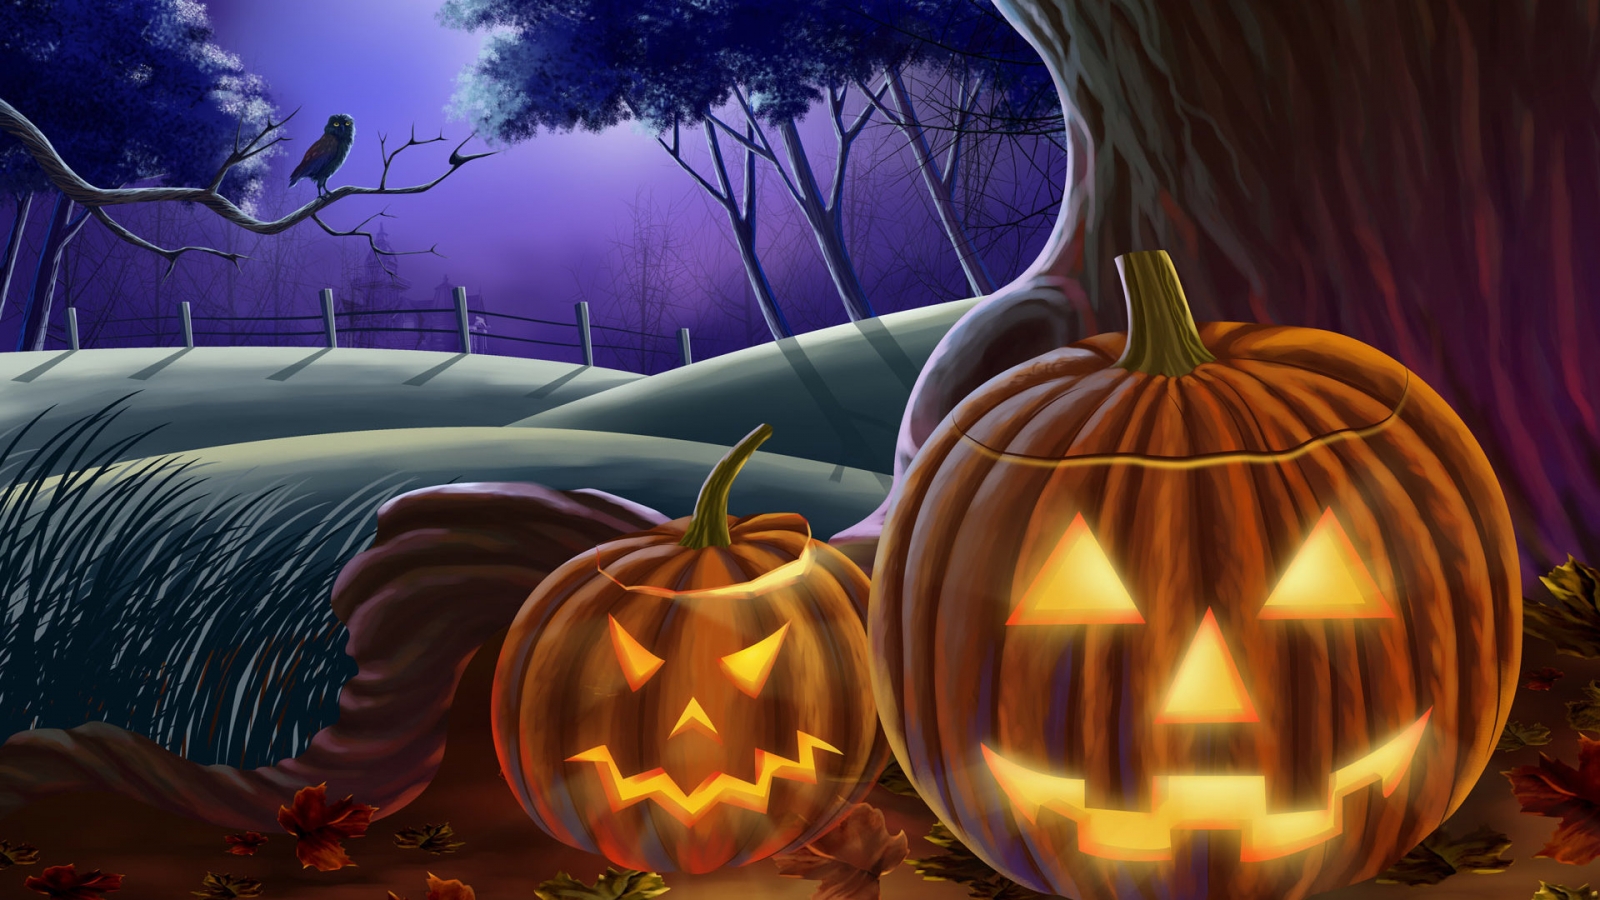 Illuminated Pumpkins for Halloween for 1600 x 900 HDTV resolution